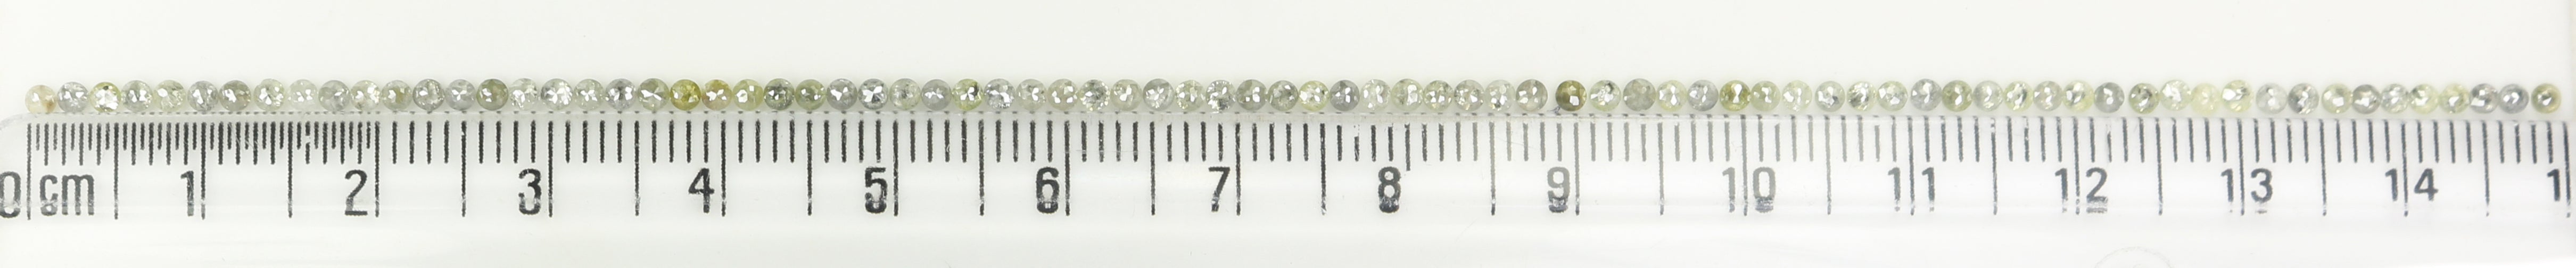 2.68 Ct Natural Loose Diamond, Round Rose Cut Diamond, Grey Diamond, Yellow Diamond, Rose Cut Diamond, Rustic Diamond, Real Diamond L092